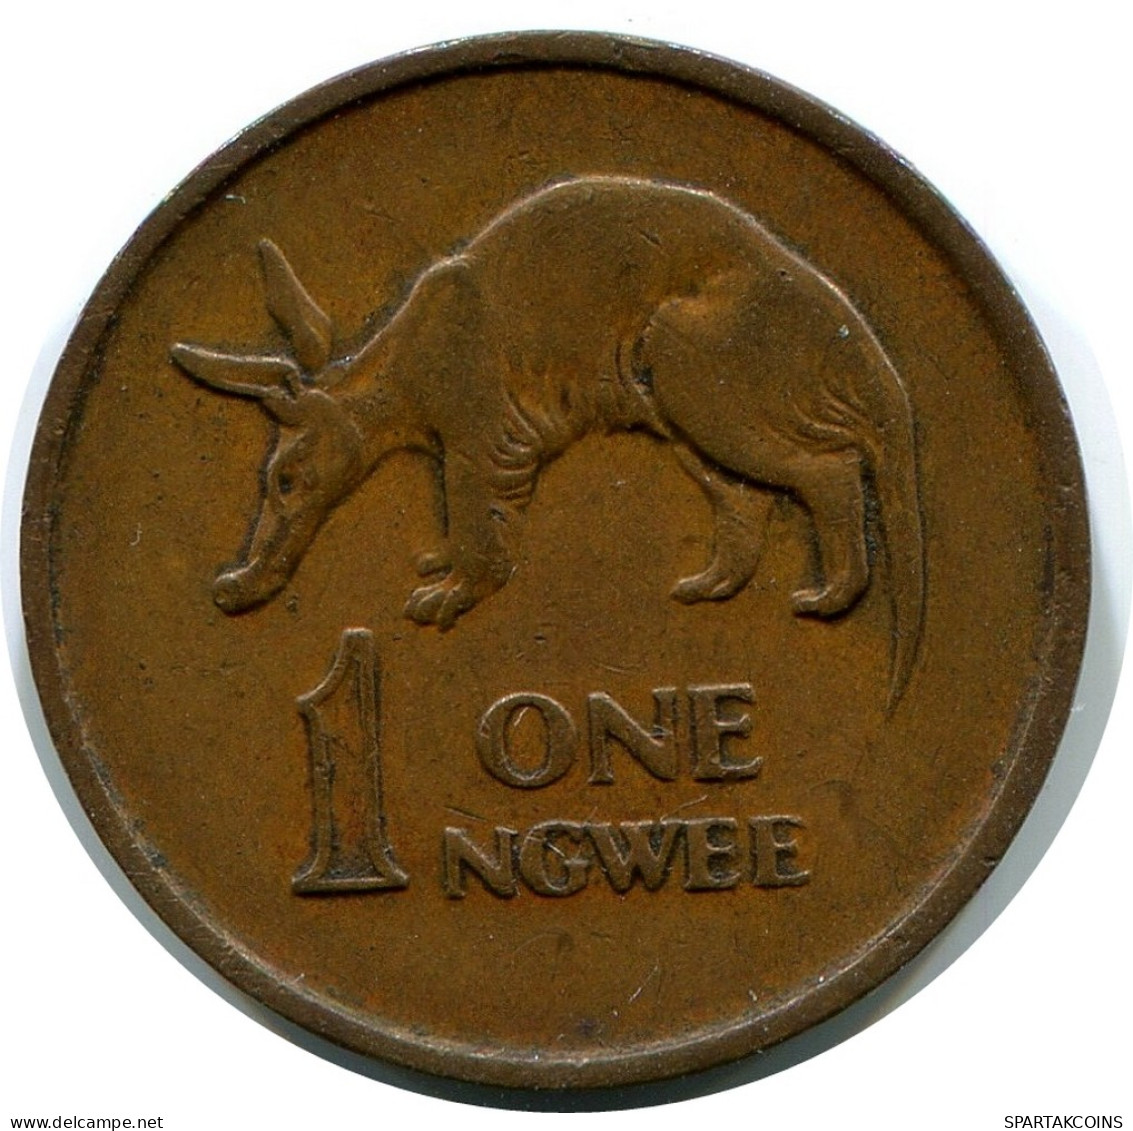 1 NGWEE 1972 ZAMBIA Coin #AP964.U - Sambia